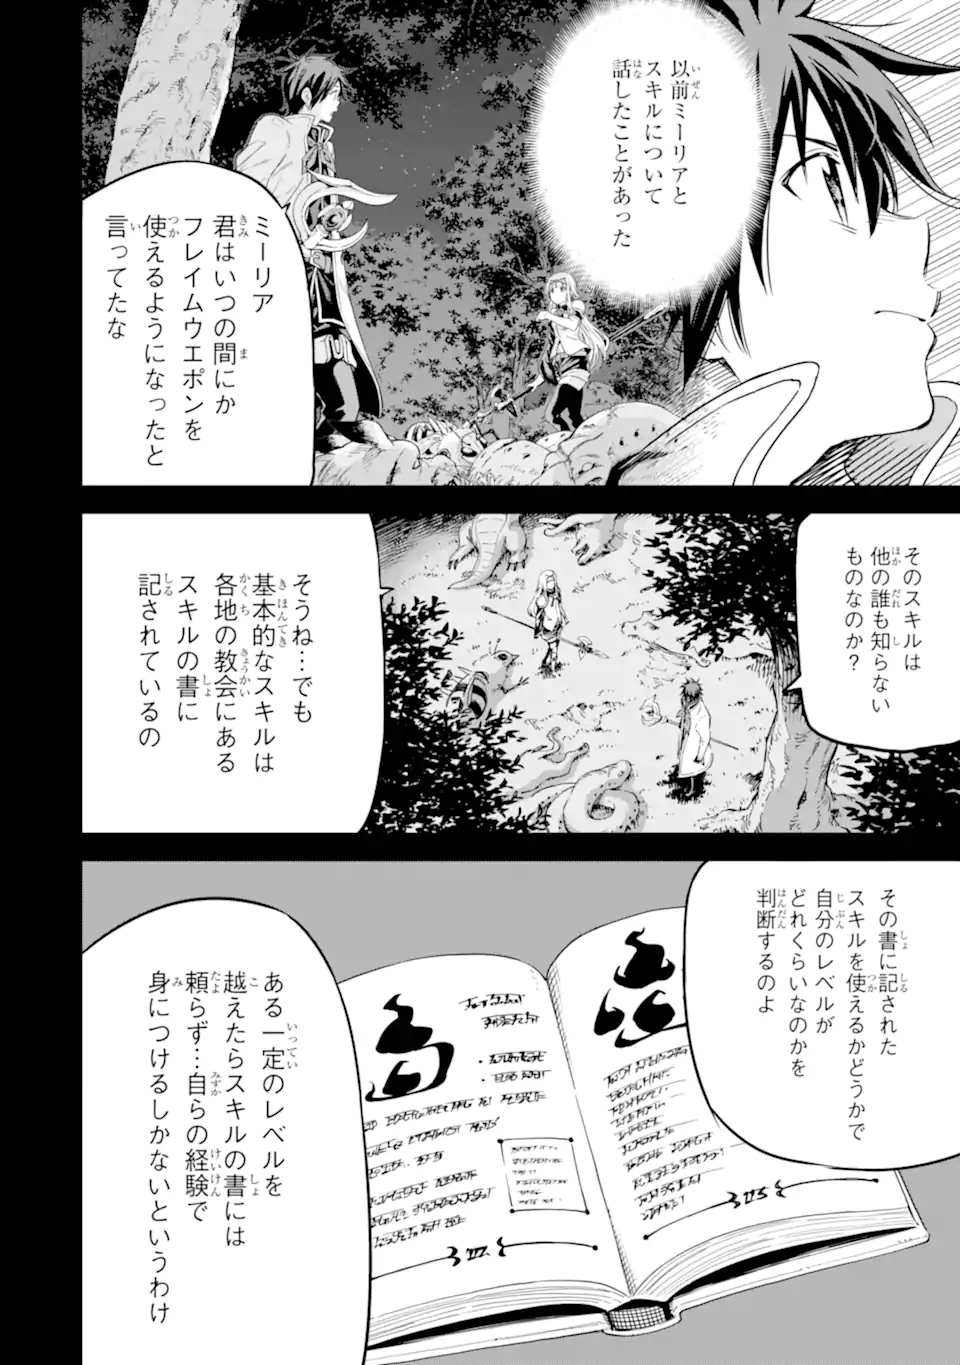 Isekai Kenja no Tensei Musou ~Geemu no Chishiki de Isekai Saikyou~ - Chapter 36.2 - Page 1